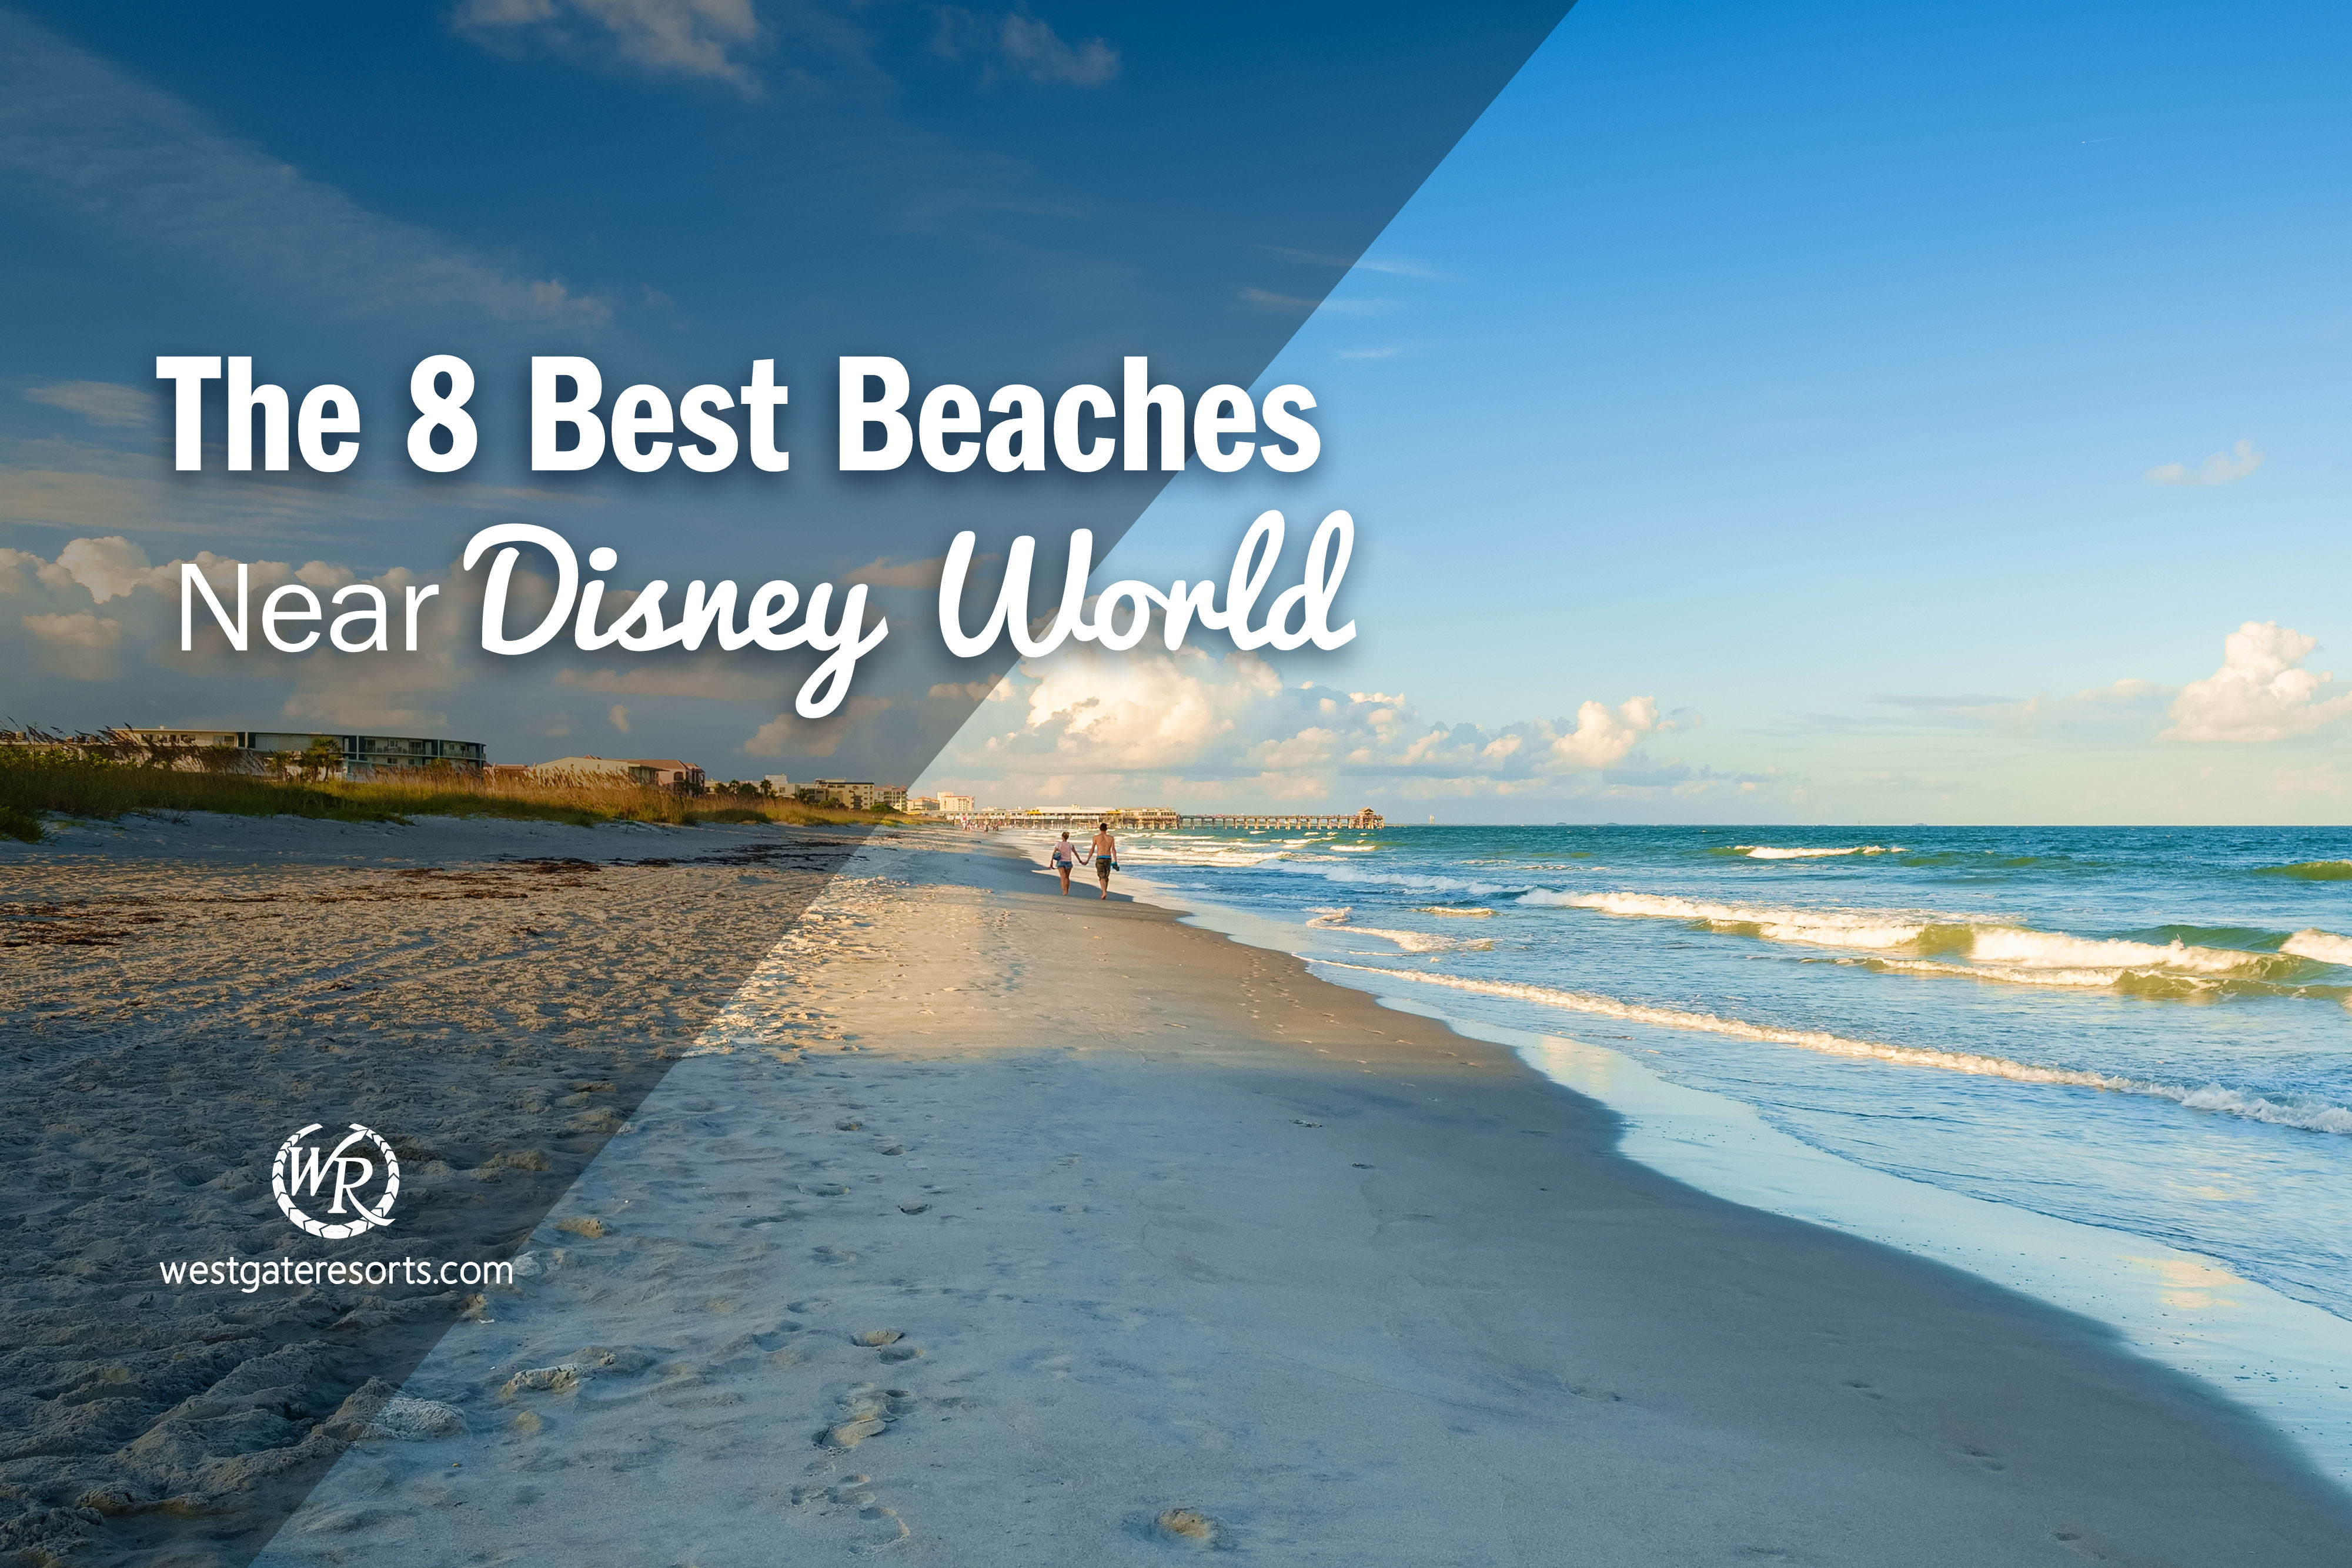 The 8 Best Beaches Near Disney World - Beaches Near Orlando